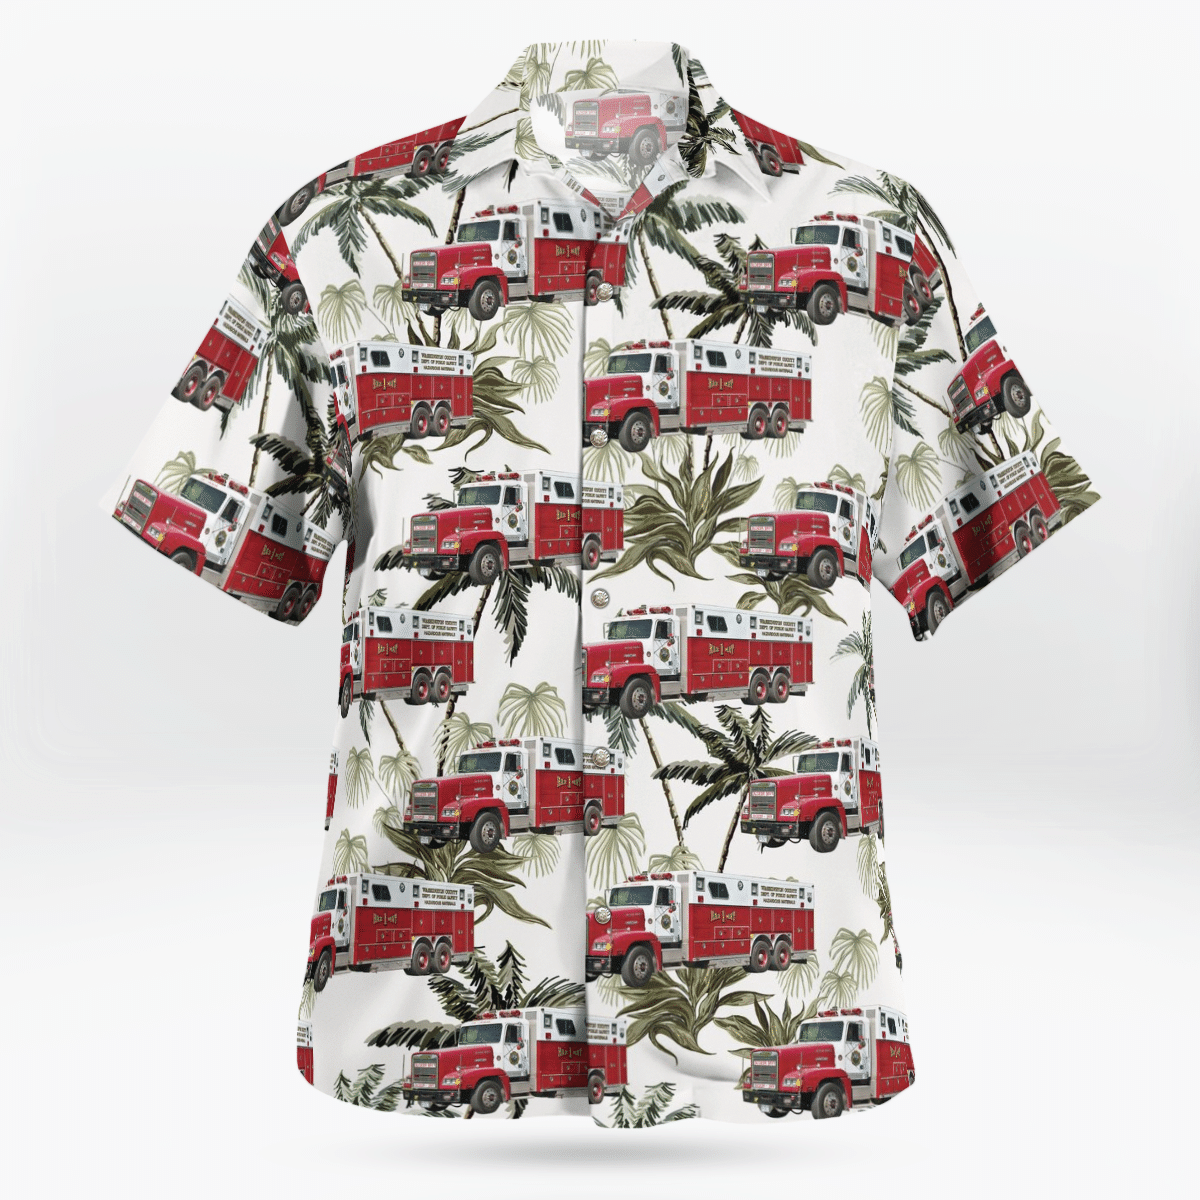 BEST Fort Edward New York Washington County Department of Public Safety Hazmat 1 Hawaiian Shirt2